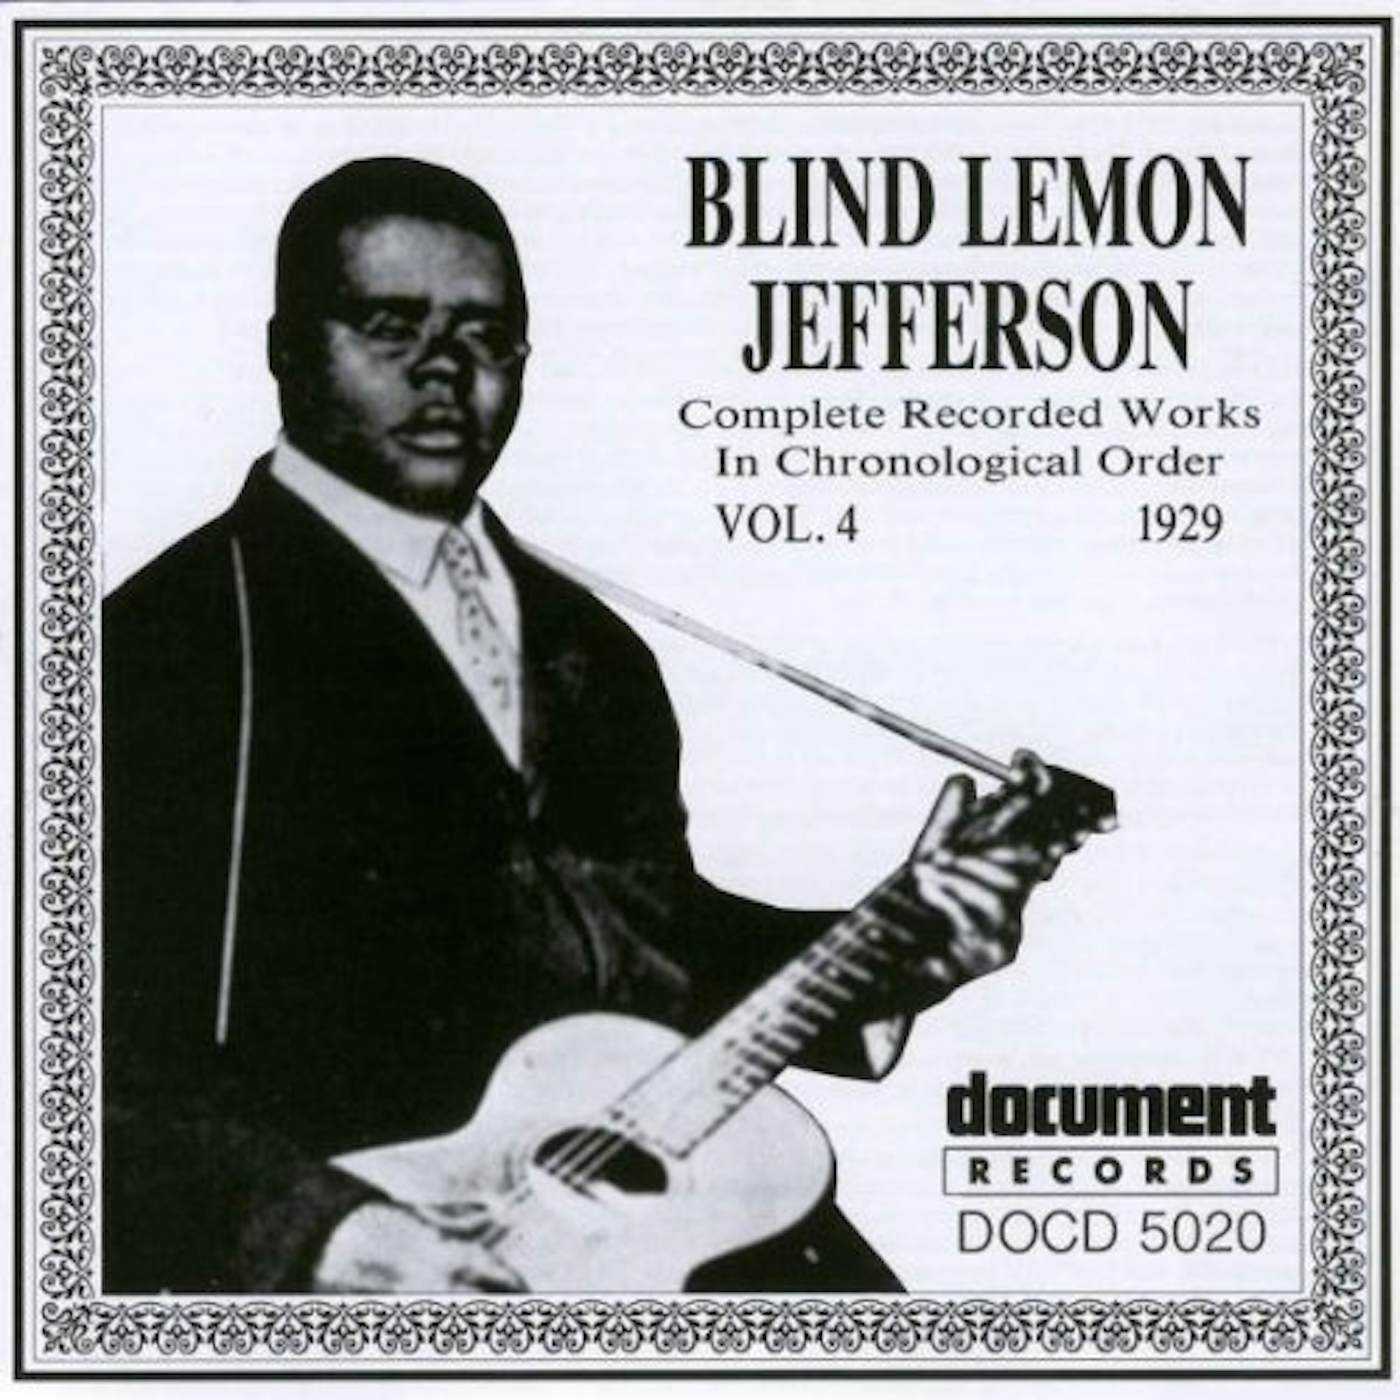 Blind Lemon Jefferson COMPLETE RECORDINGS 1925-1929 VOL. 4 (1929) CD